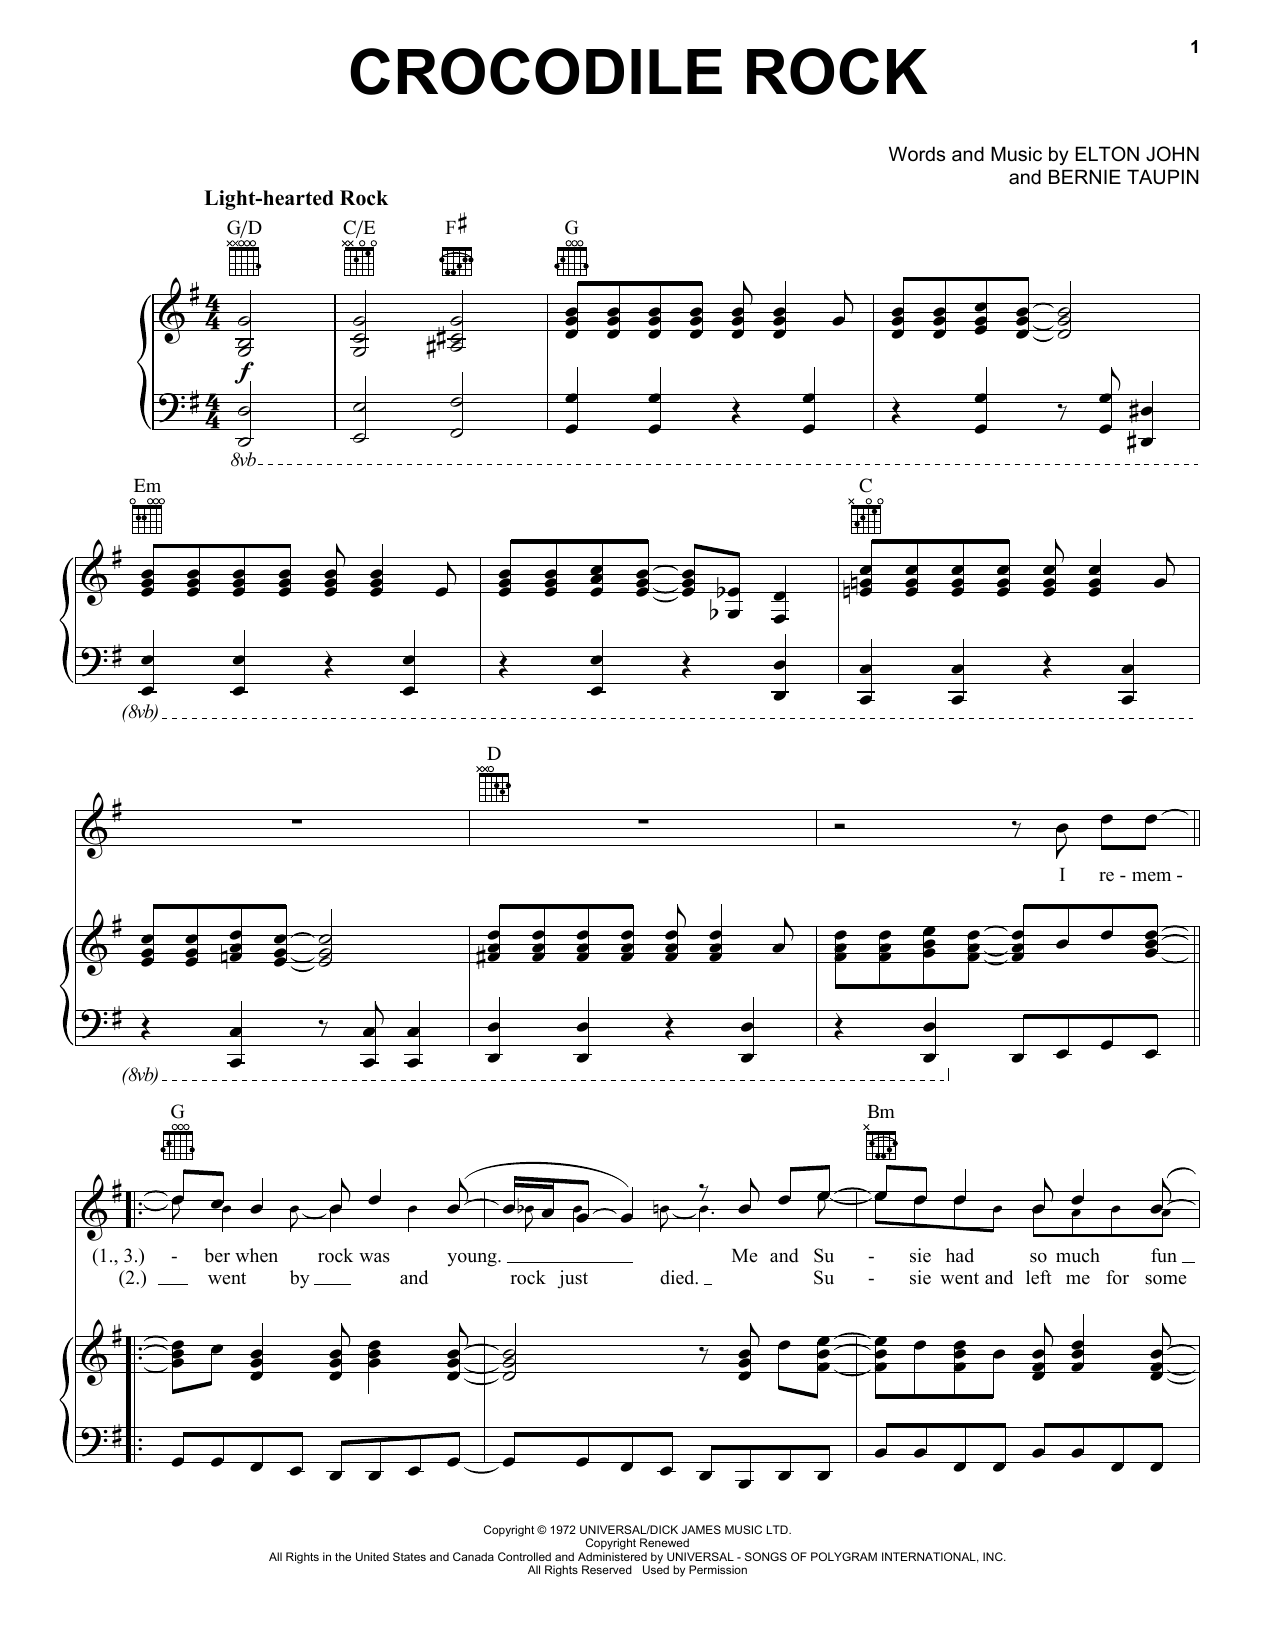 Elton John Crocodile Rock Sheet Music Notes & Chords for Violin - Download or Print PDF